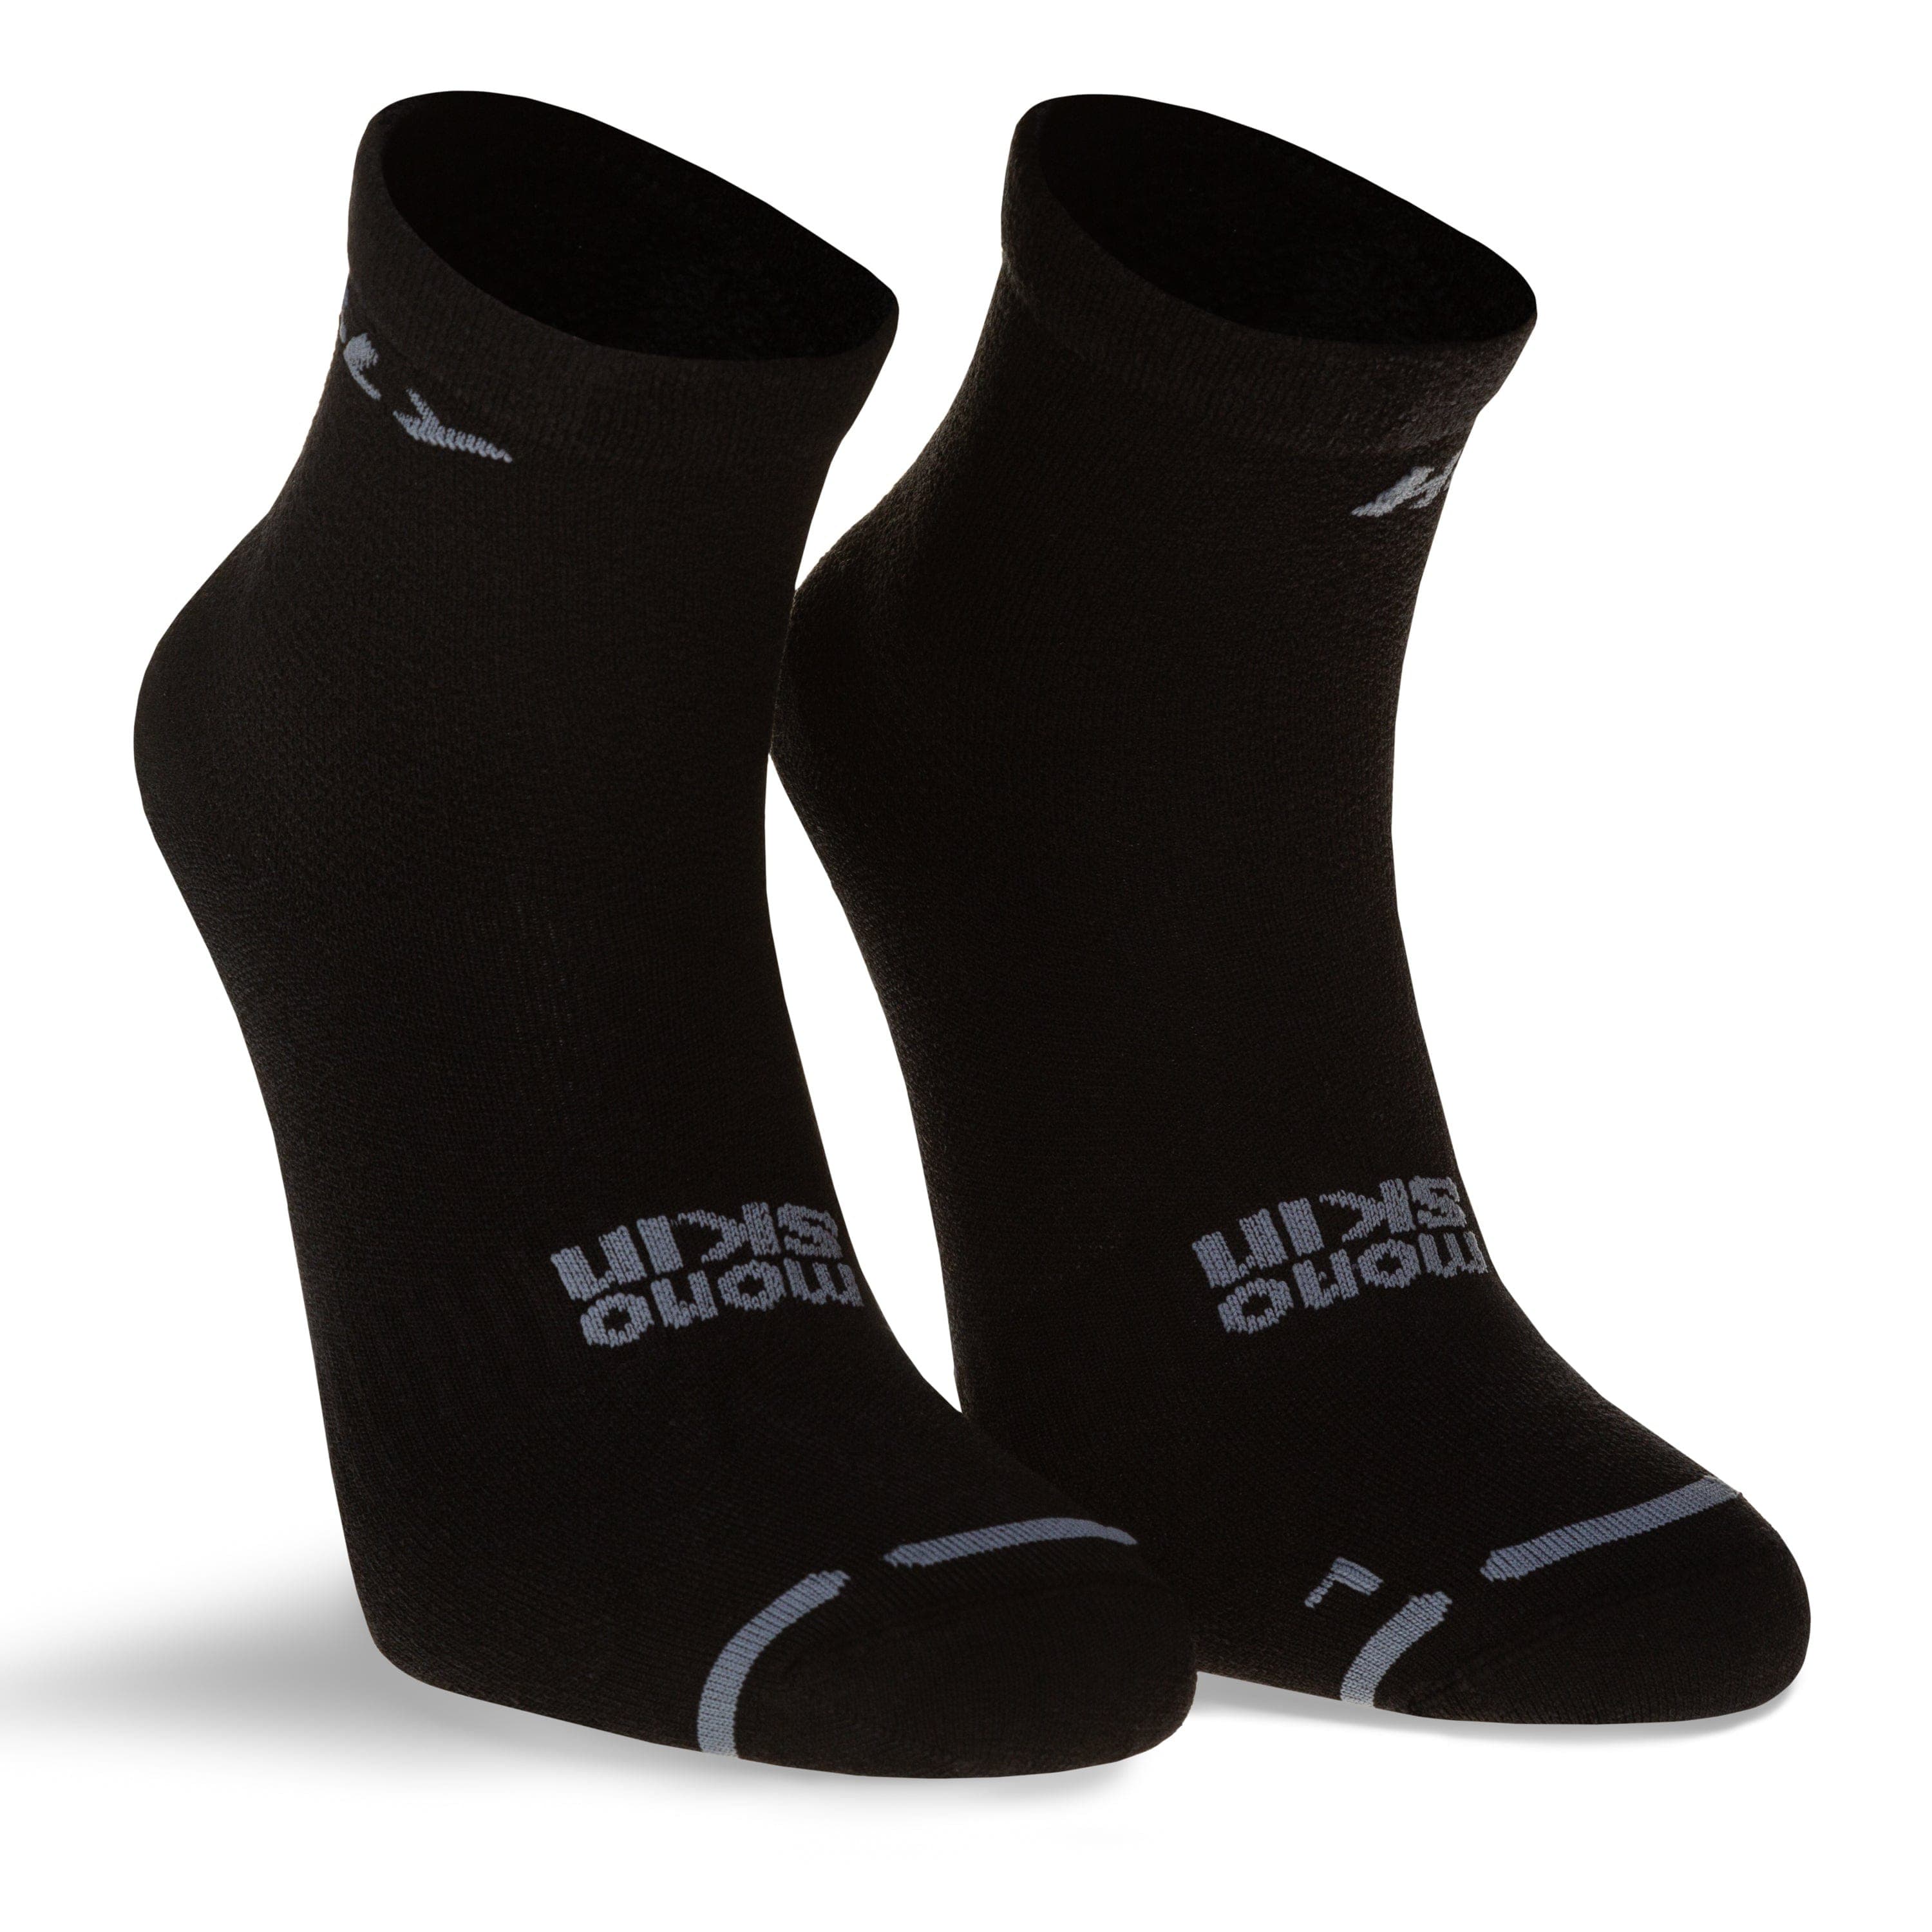 Hilly Active Anklet Zero Cushioning - Black/Grey